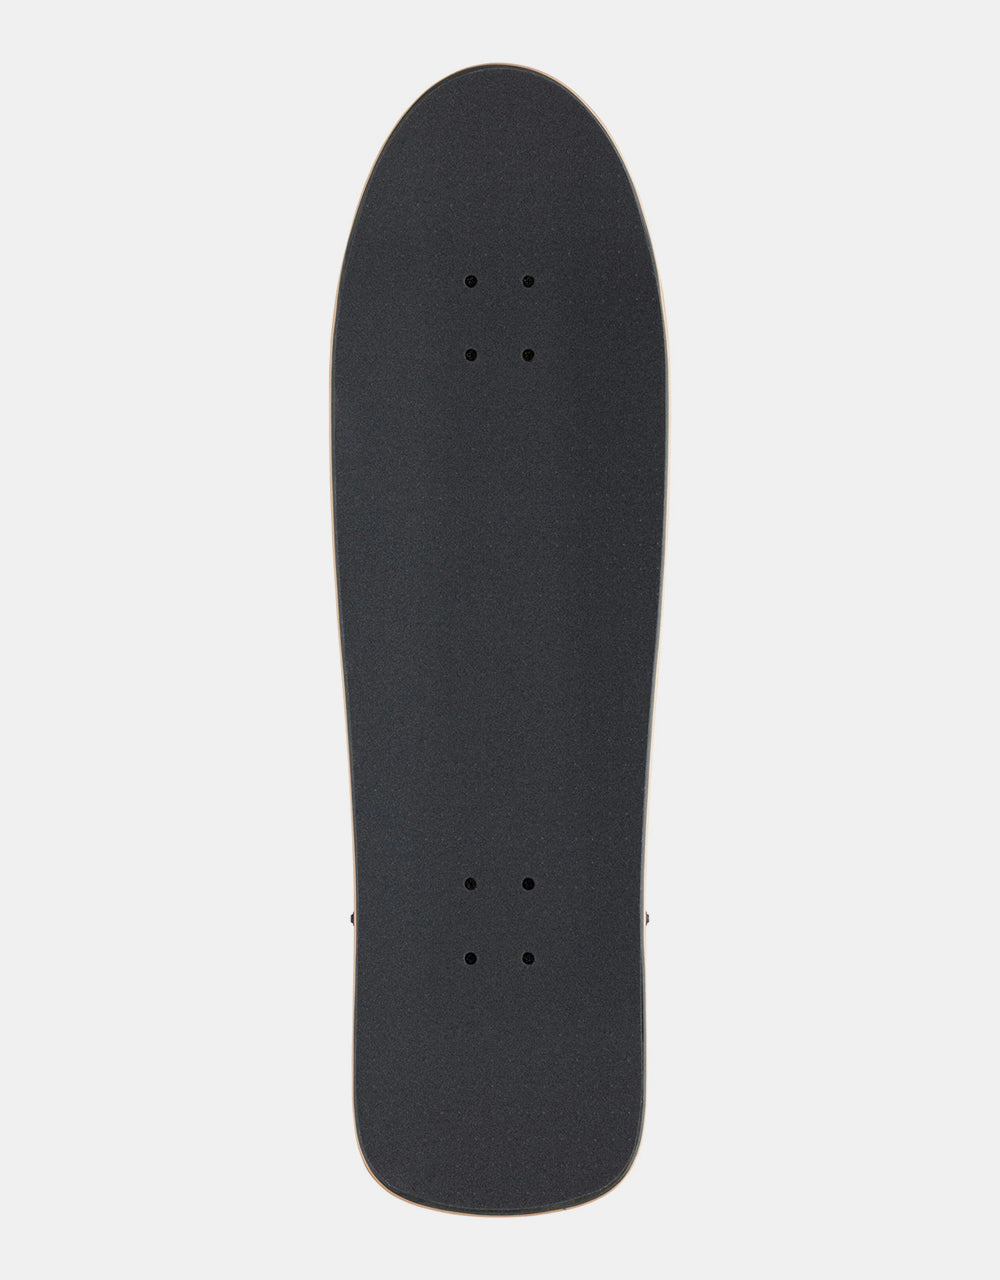 Santa Cruz Meek OG Slasher Hand Shaped Cruiser Skateboard - 9.7" x 31.7"